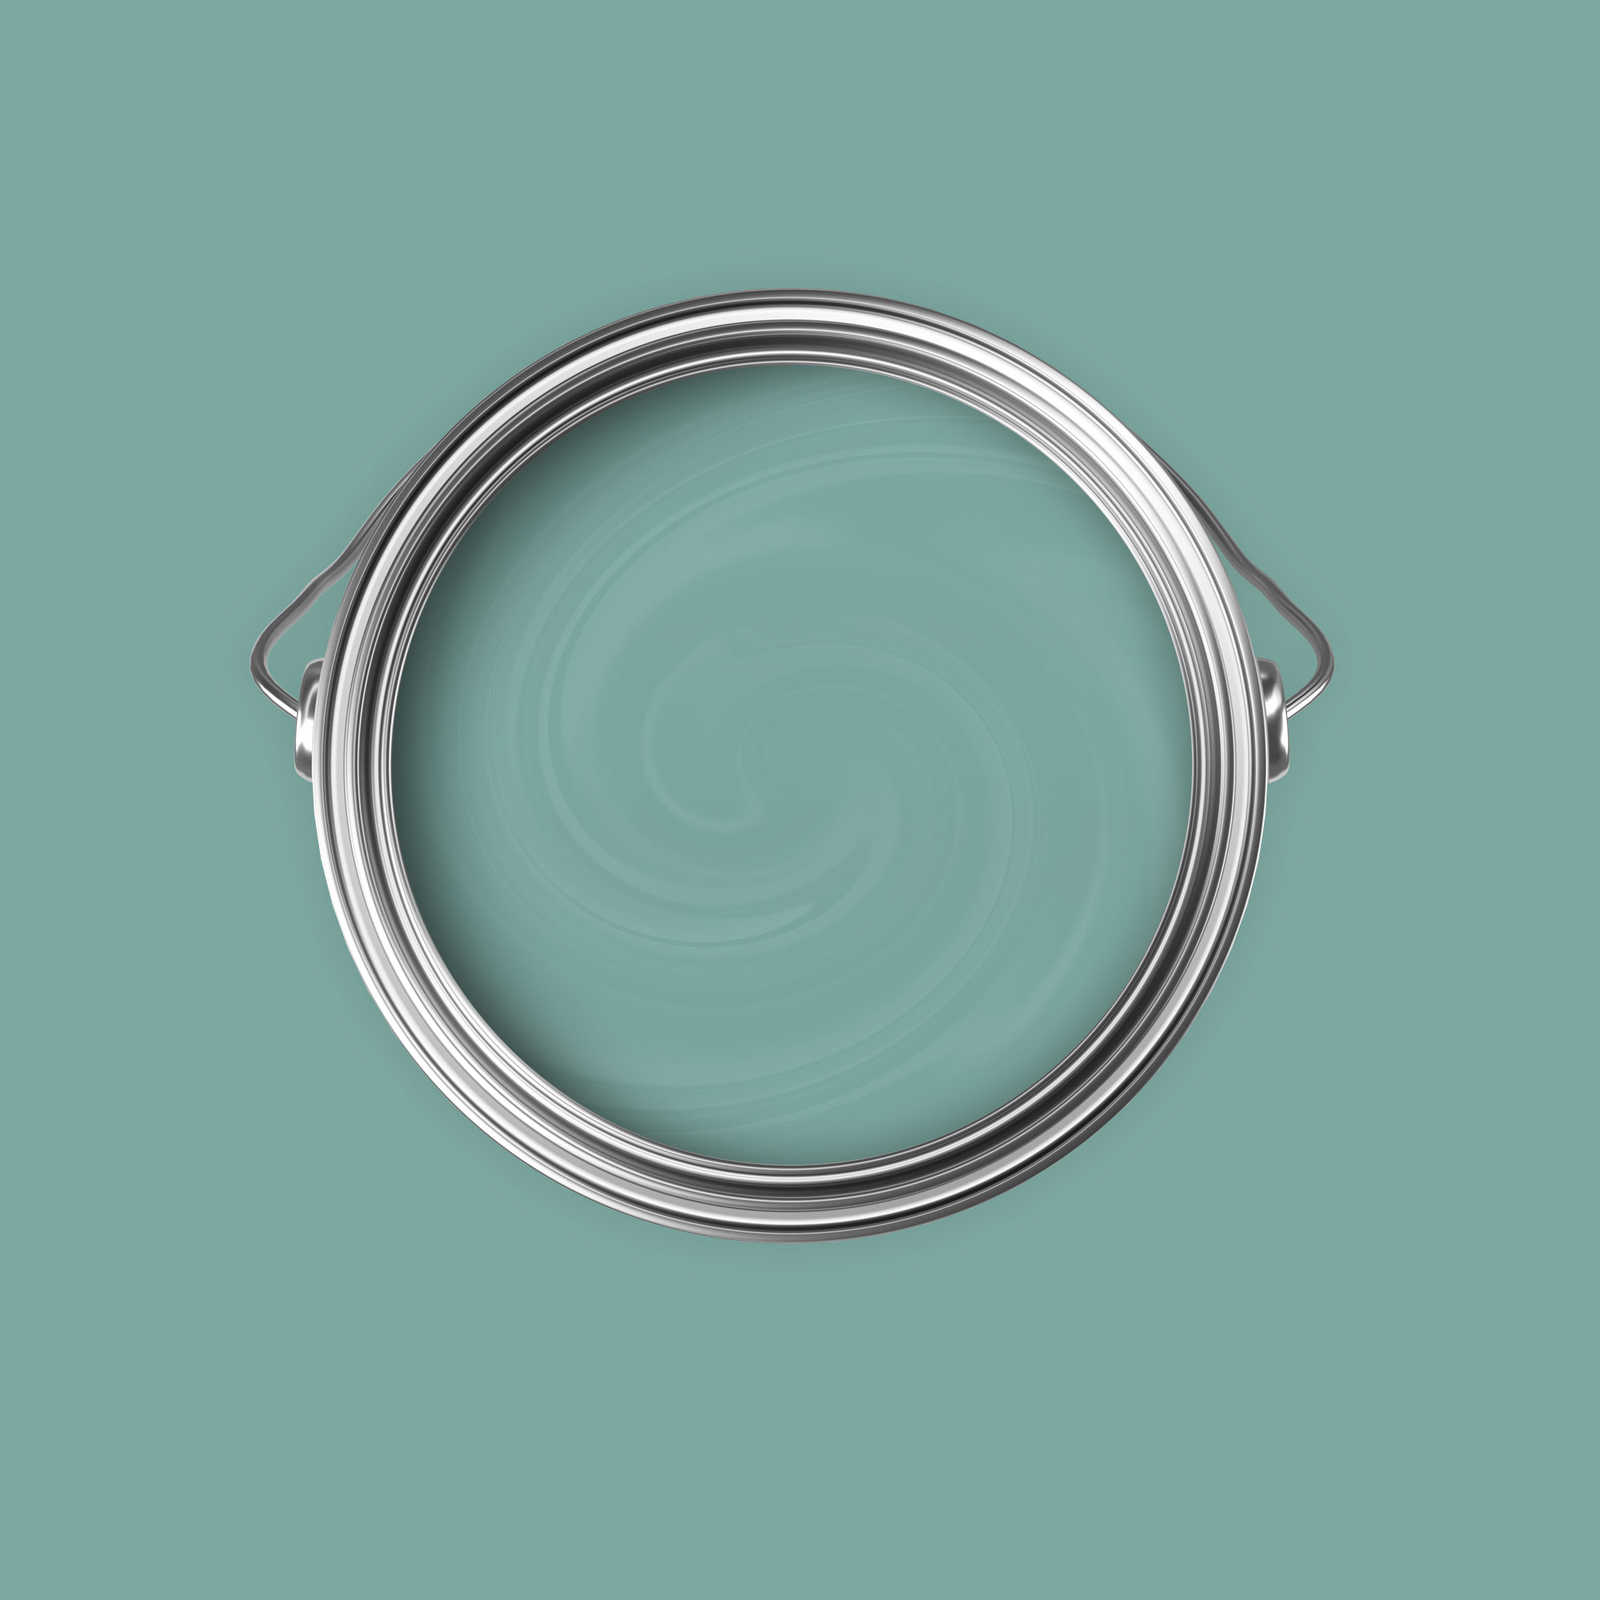             Premium Wall Paint Fresh Sage »Expressive Emerald« NW409 – 5 litre
        